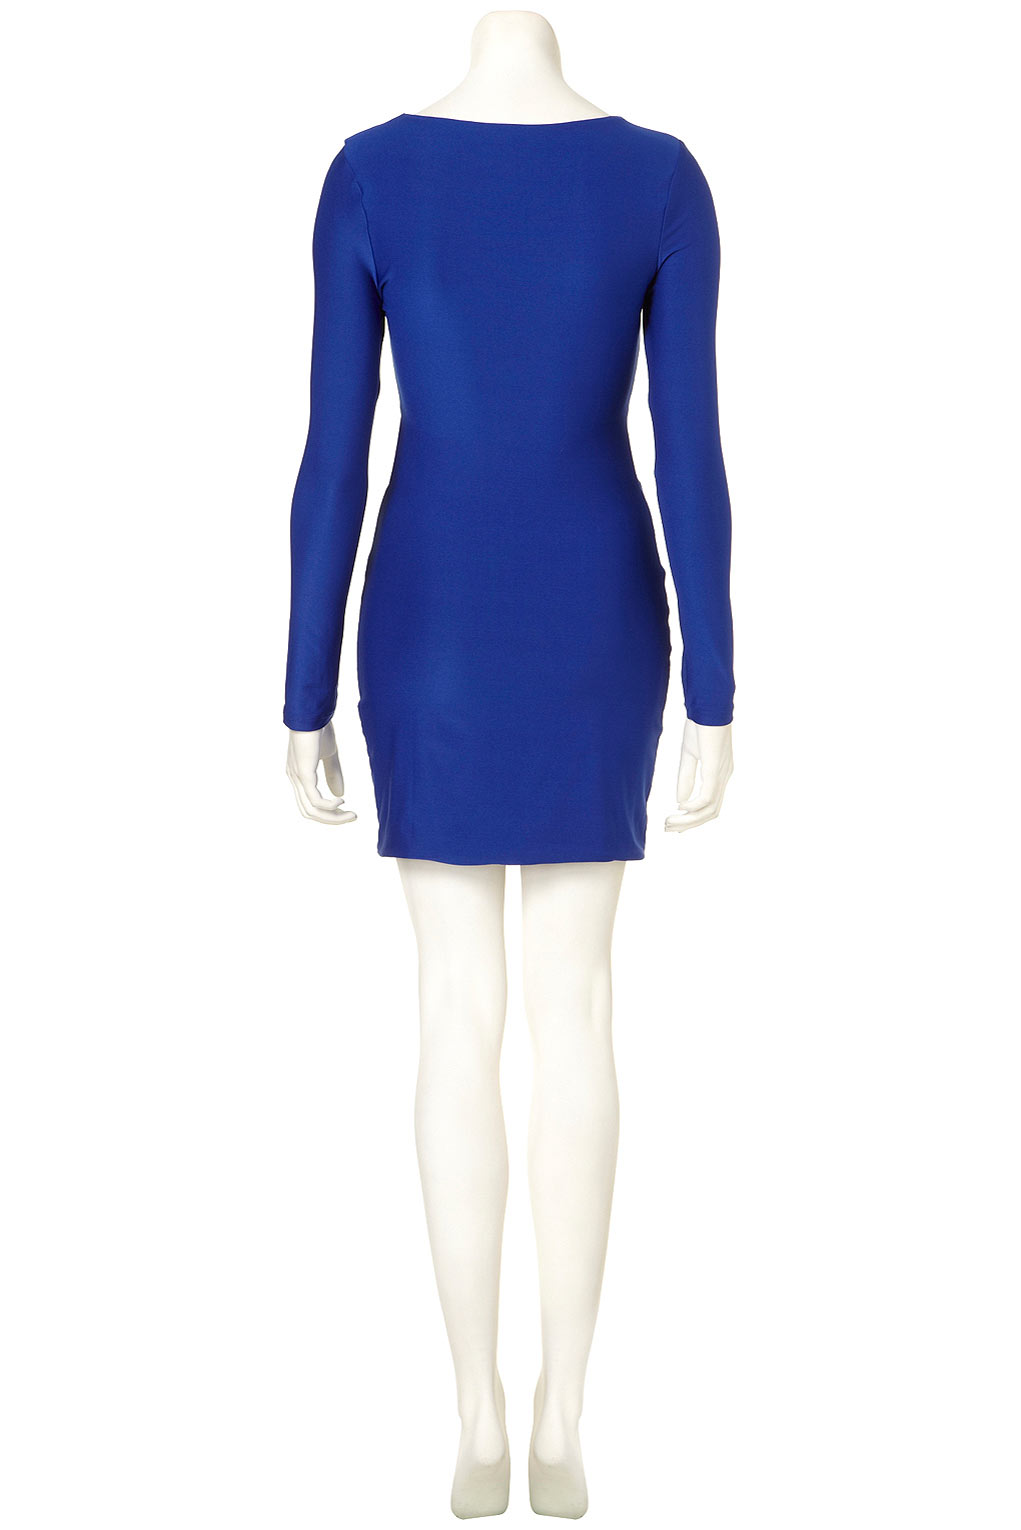 Topshop Twist Cut Out Bodycon Dress in Blue | Lyst